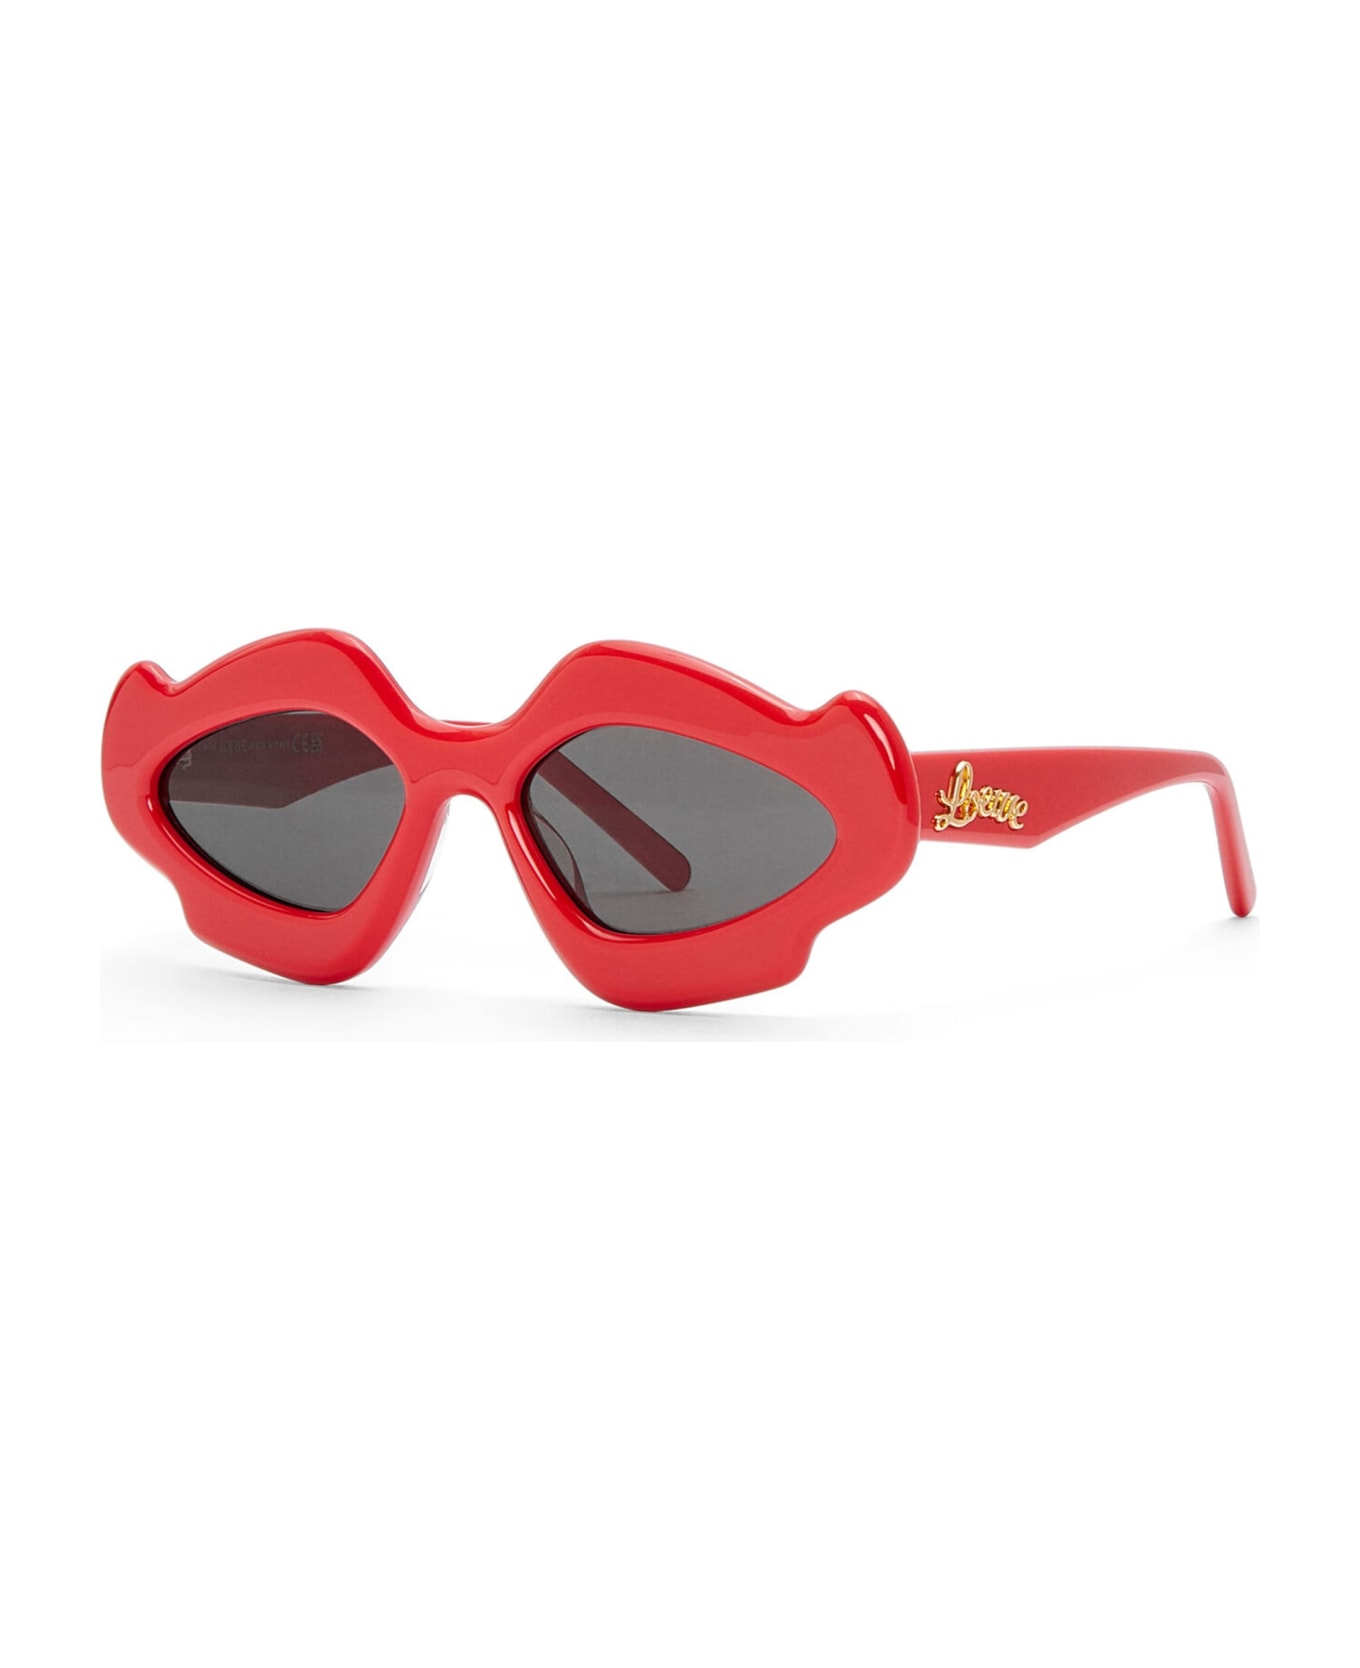 Loewe Lw40109u - Red Sunglasses - red